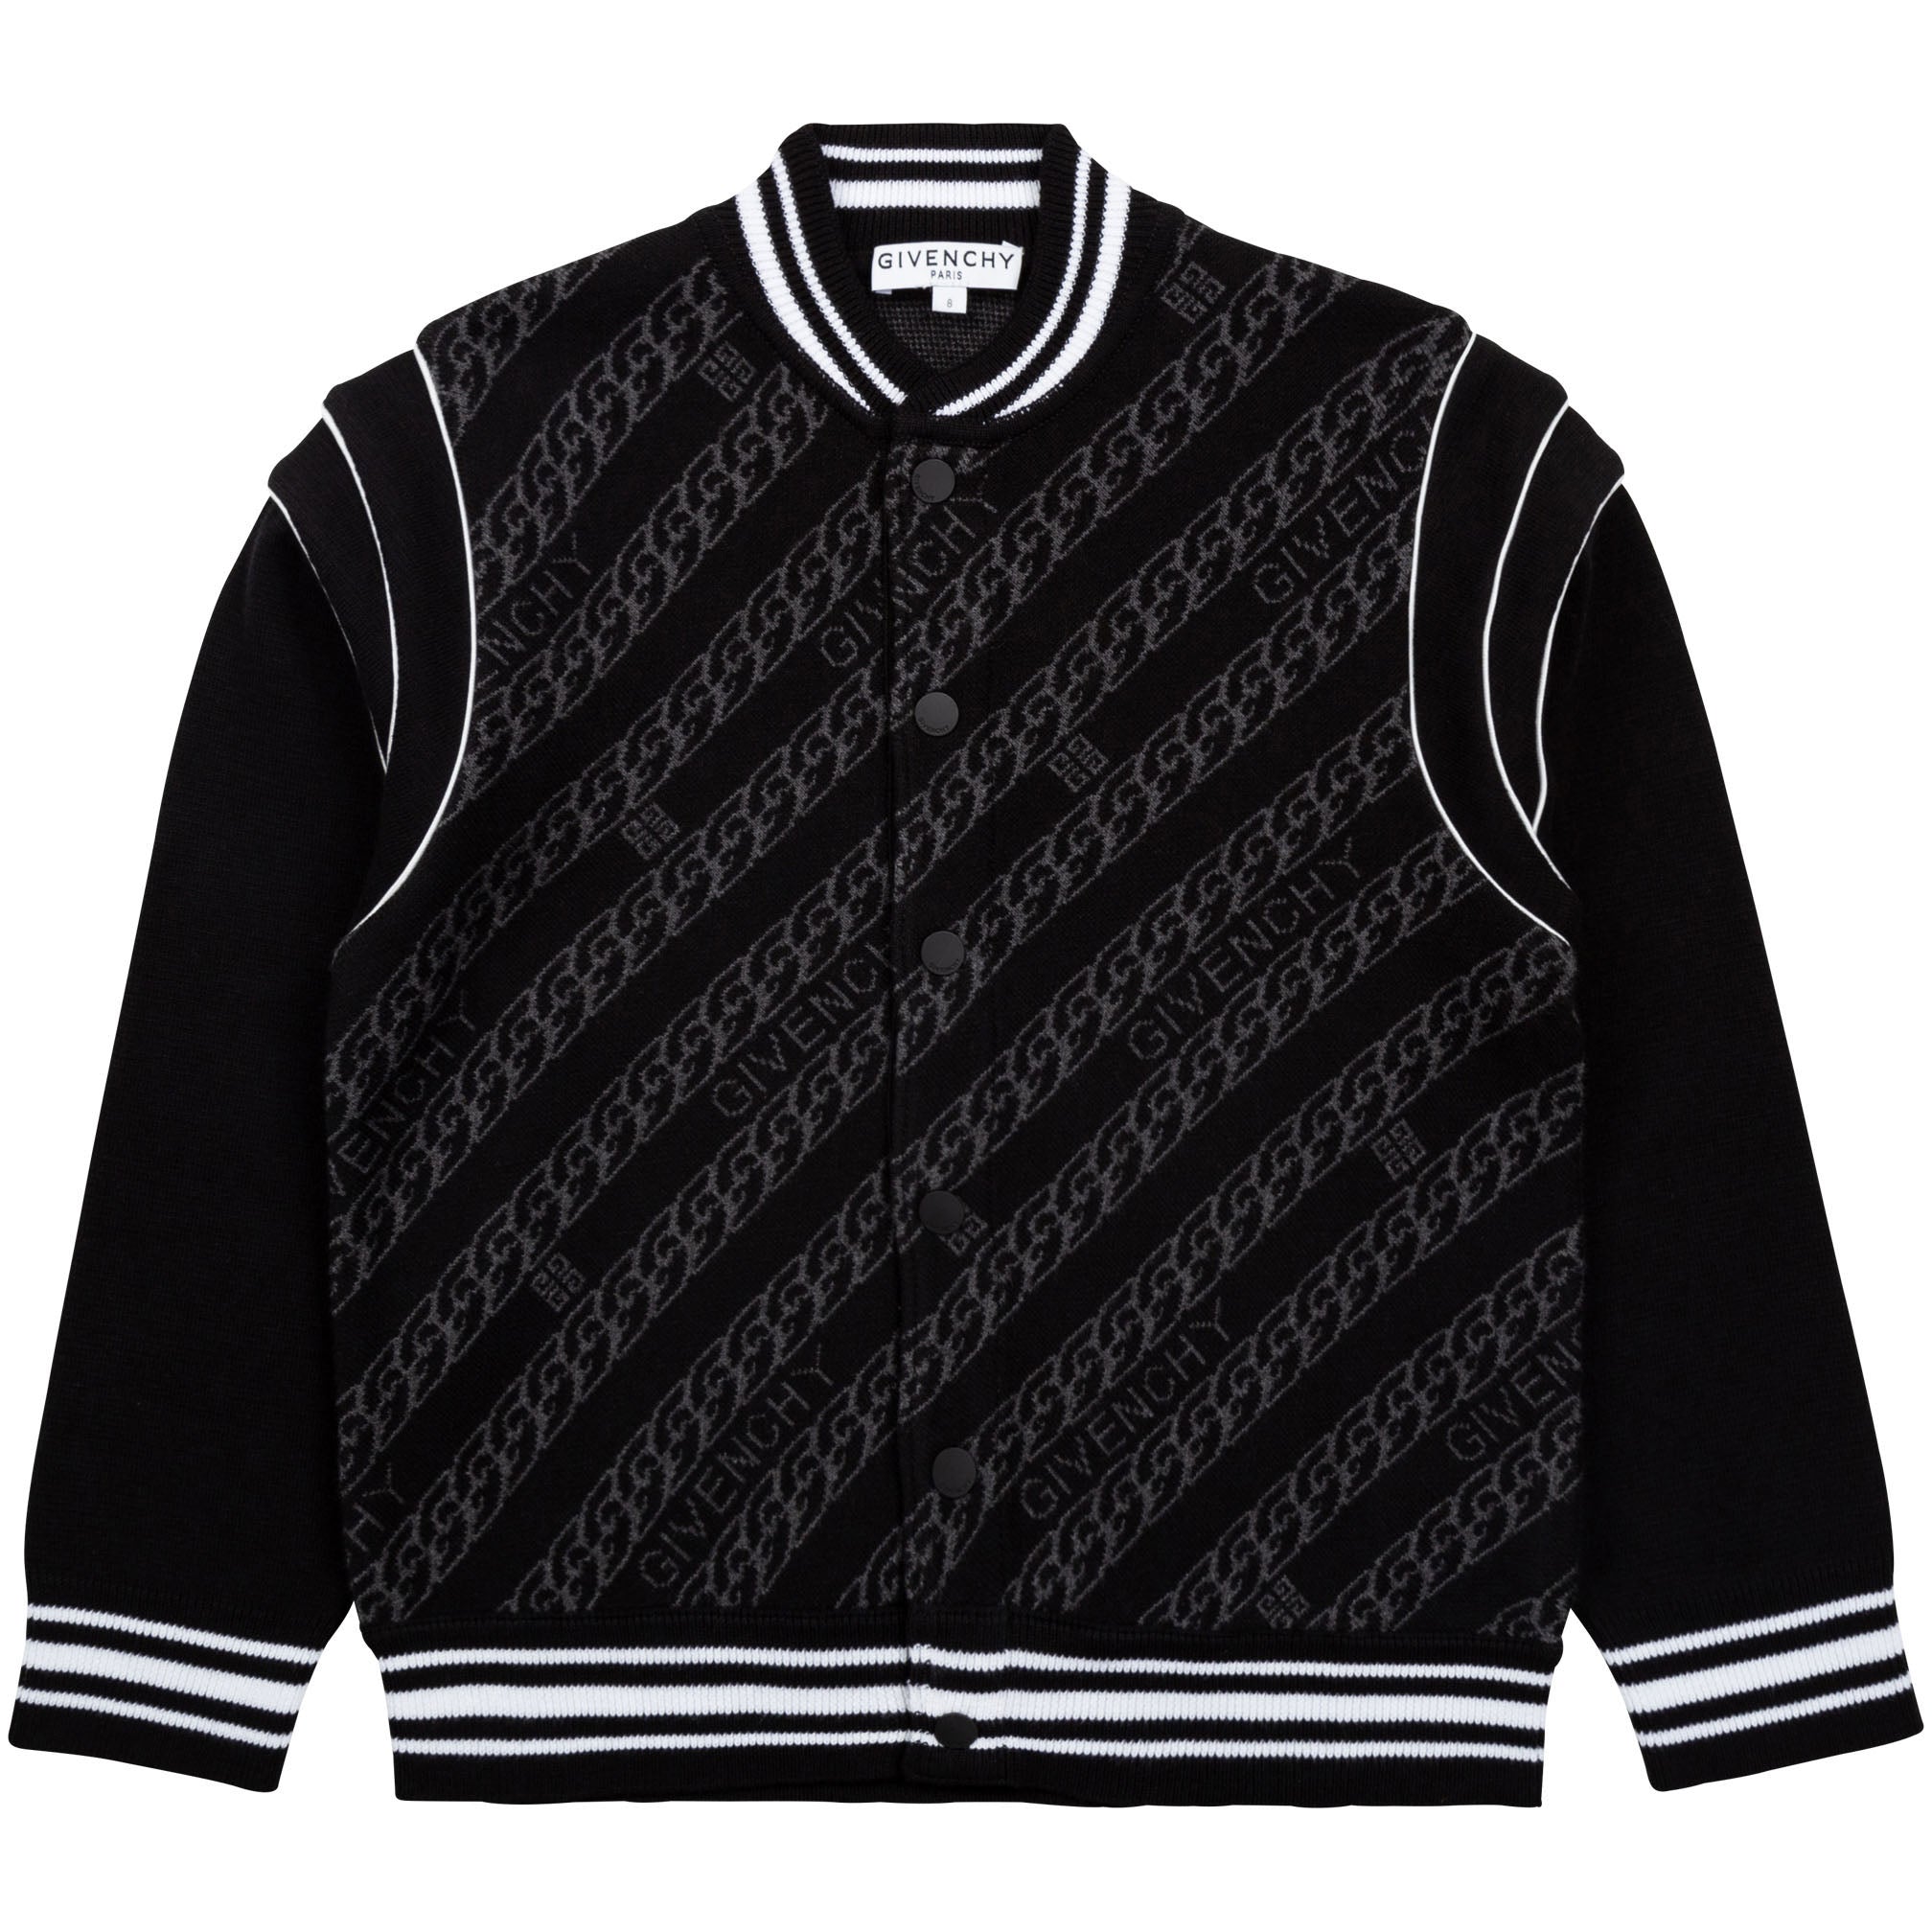 Givenchy Letterman Jacket